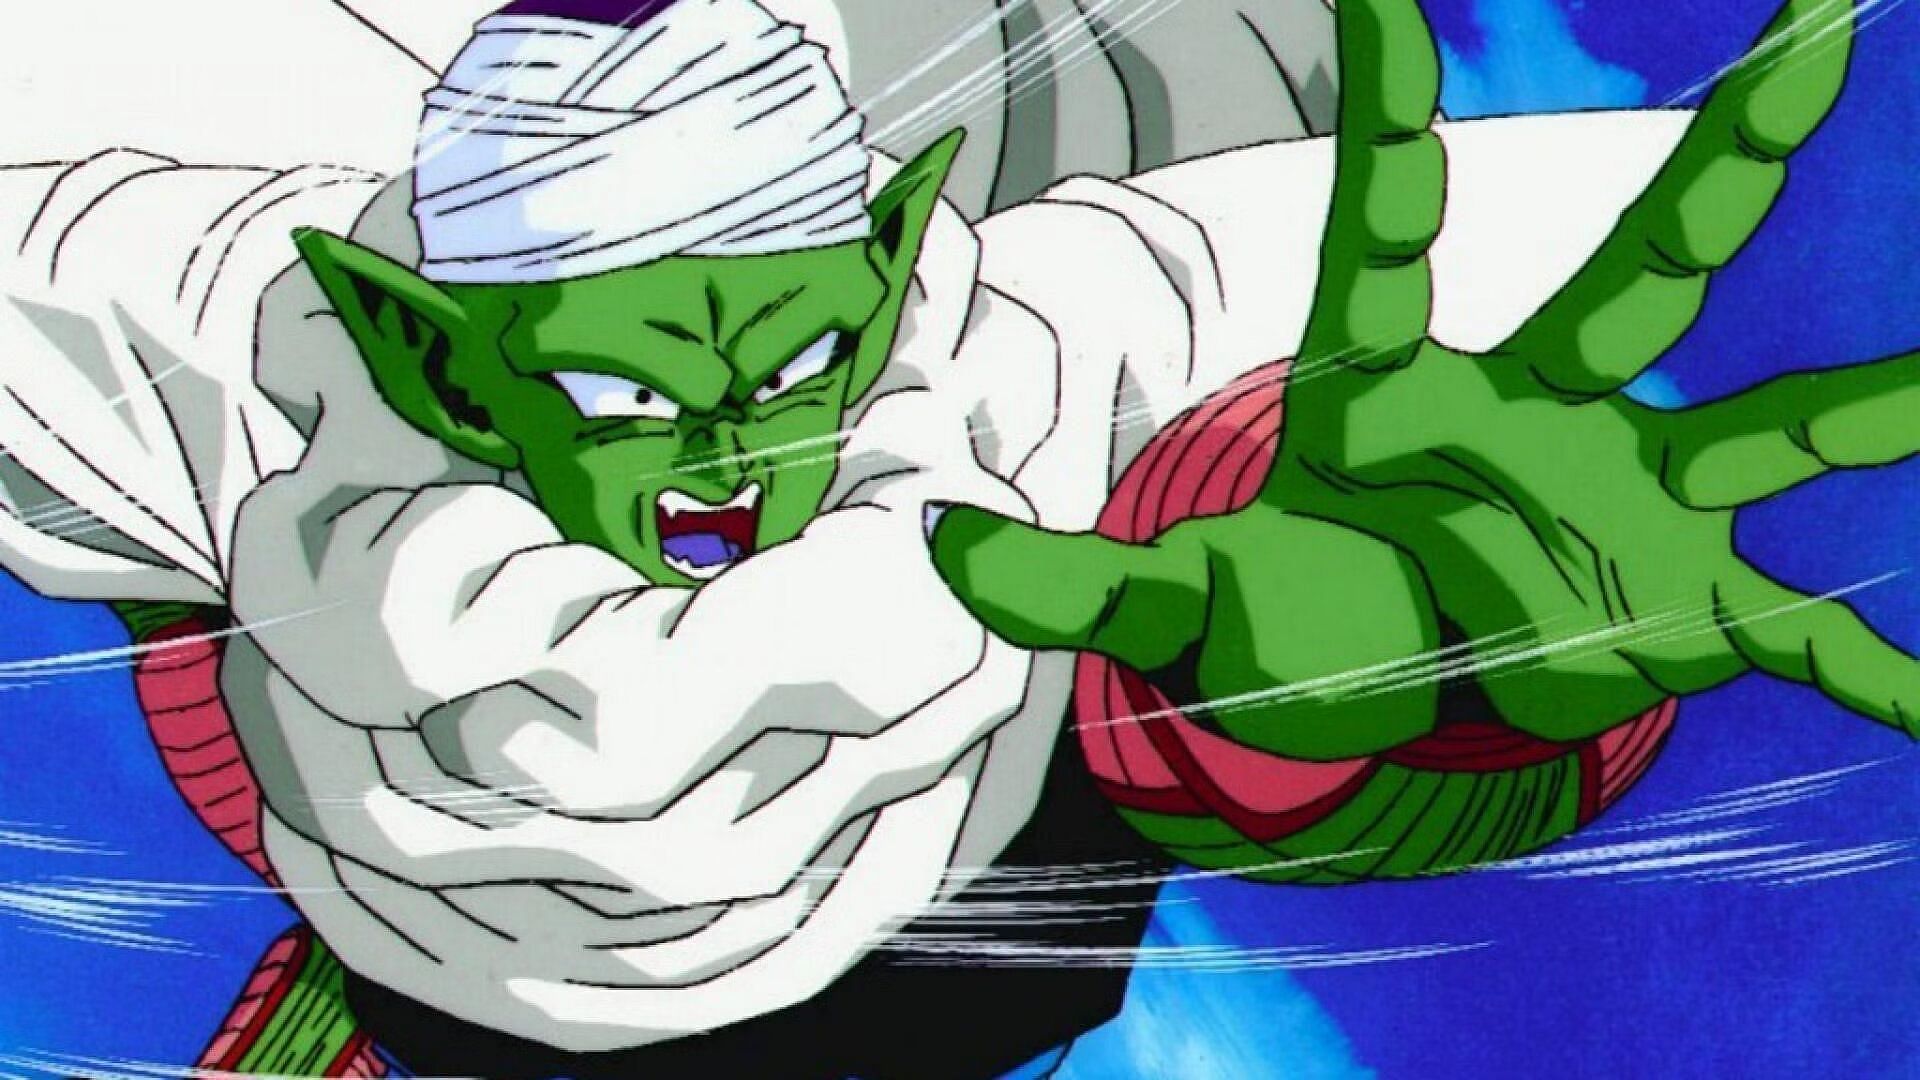 Piccolo in the Z anime (Image via Toei Animation).